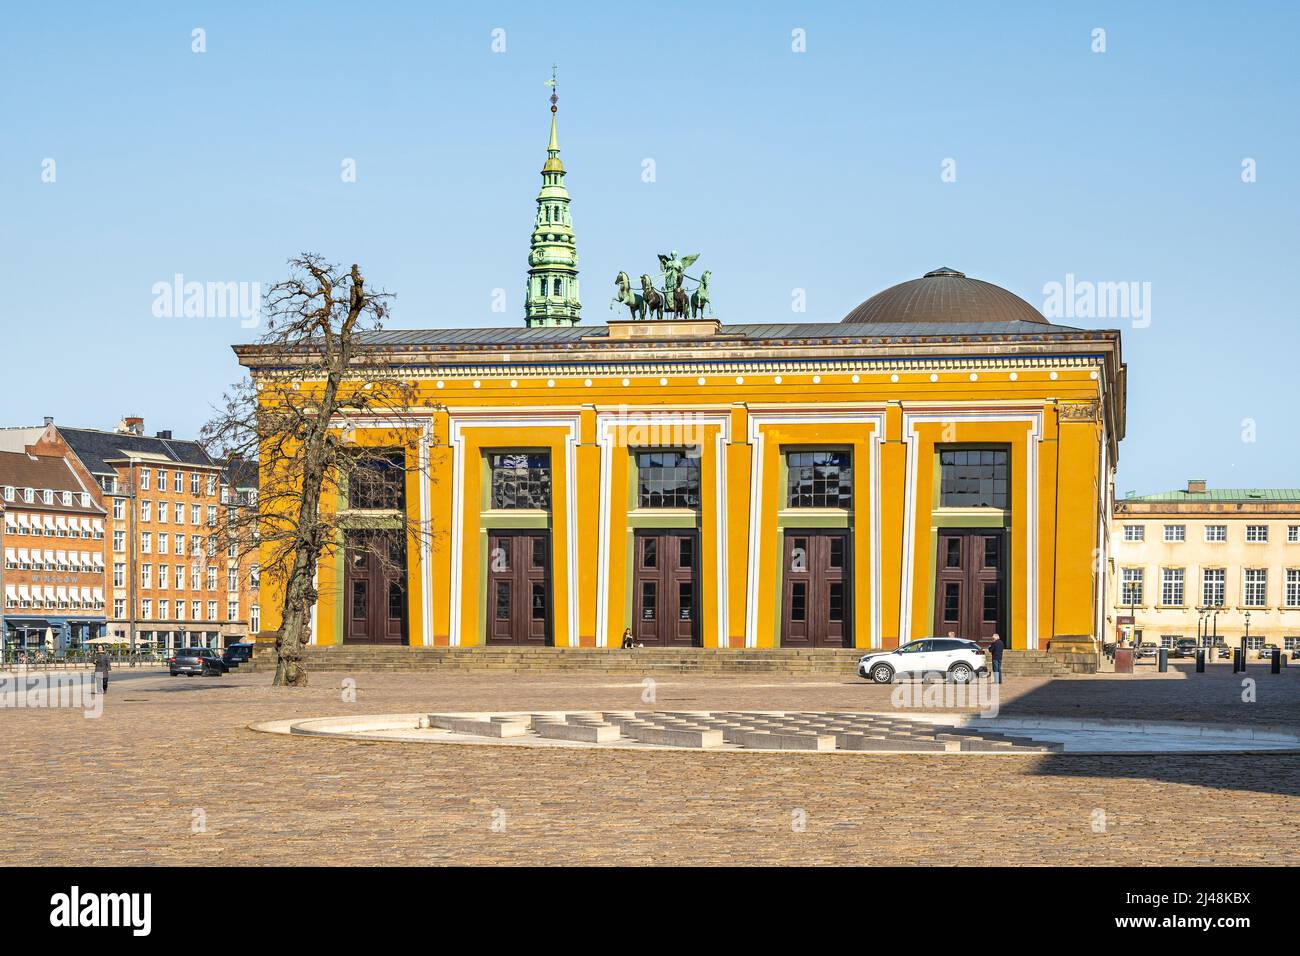 Facade and square in front of the Thorvaldsen museum in Copenhagen. Slotsholmen, Copenhagen, Denmark, Europe Stock Photo